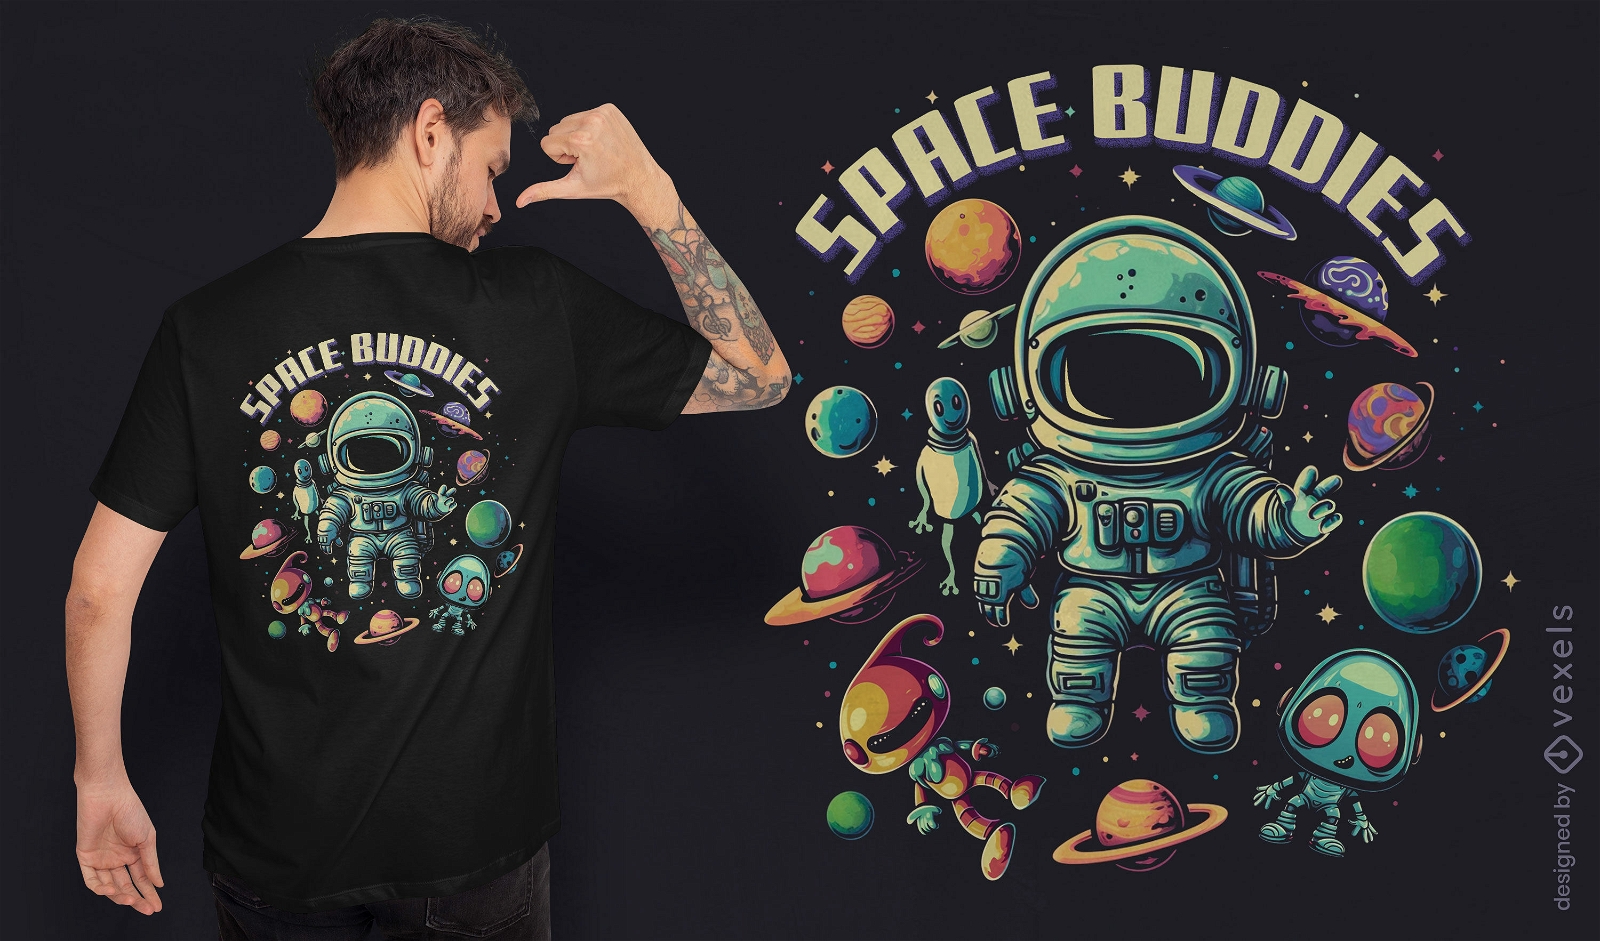 Space buddies t-shirt design